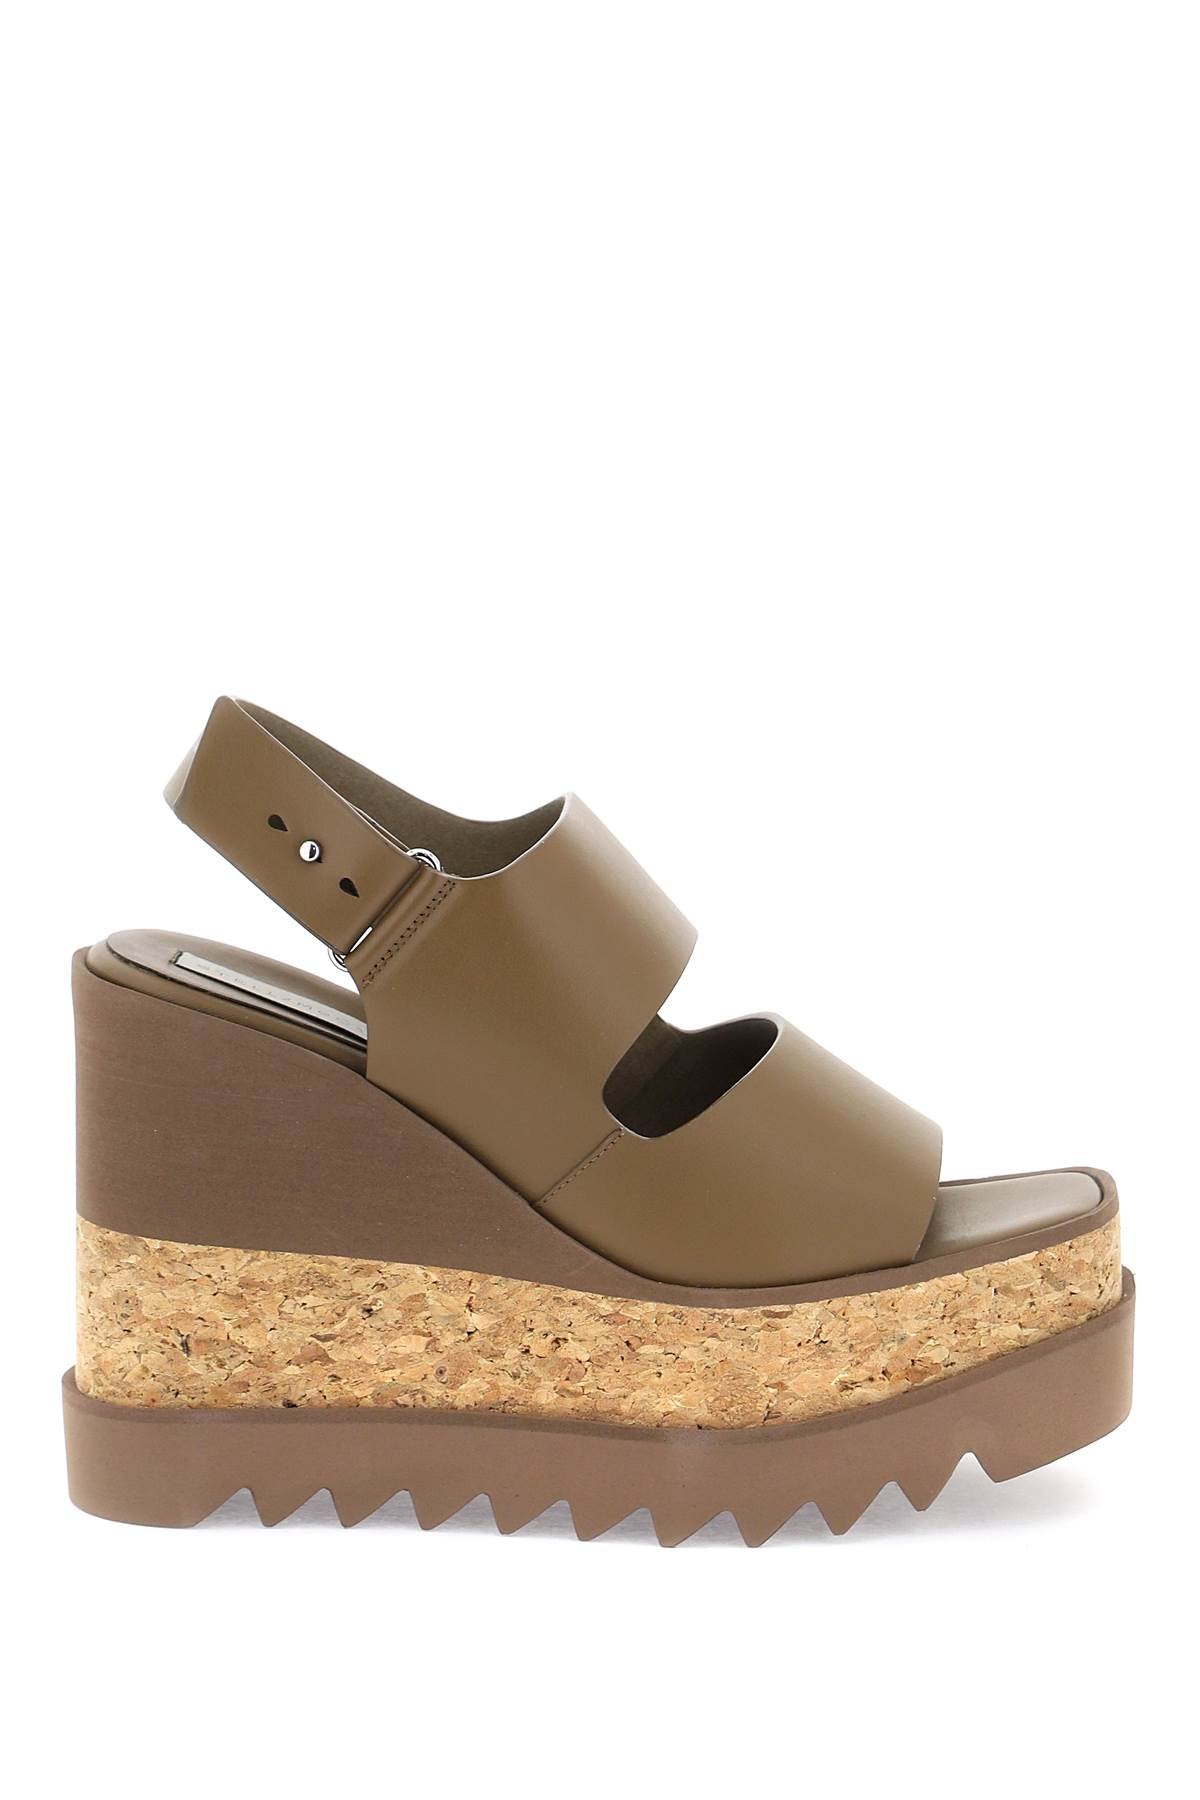 Stella mccartney elyse platform sandals with wedge-0